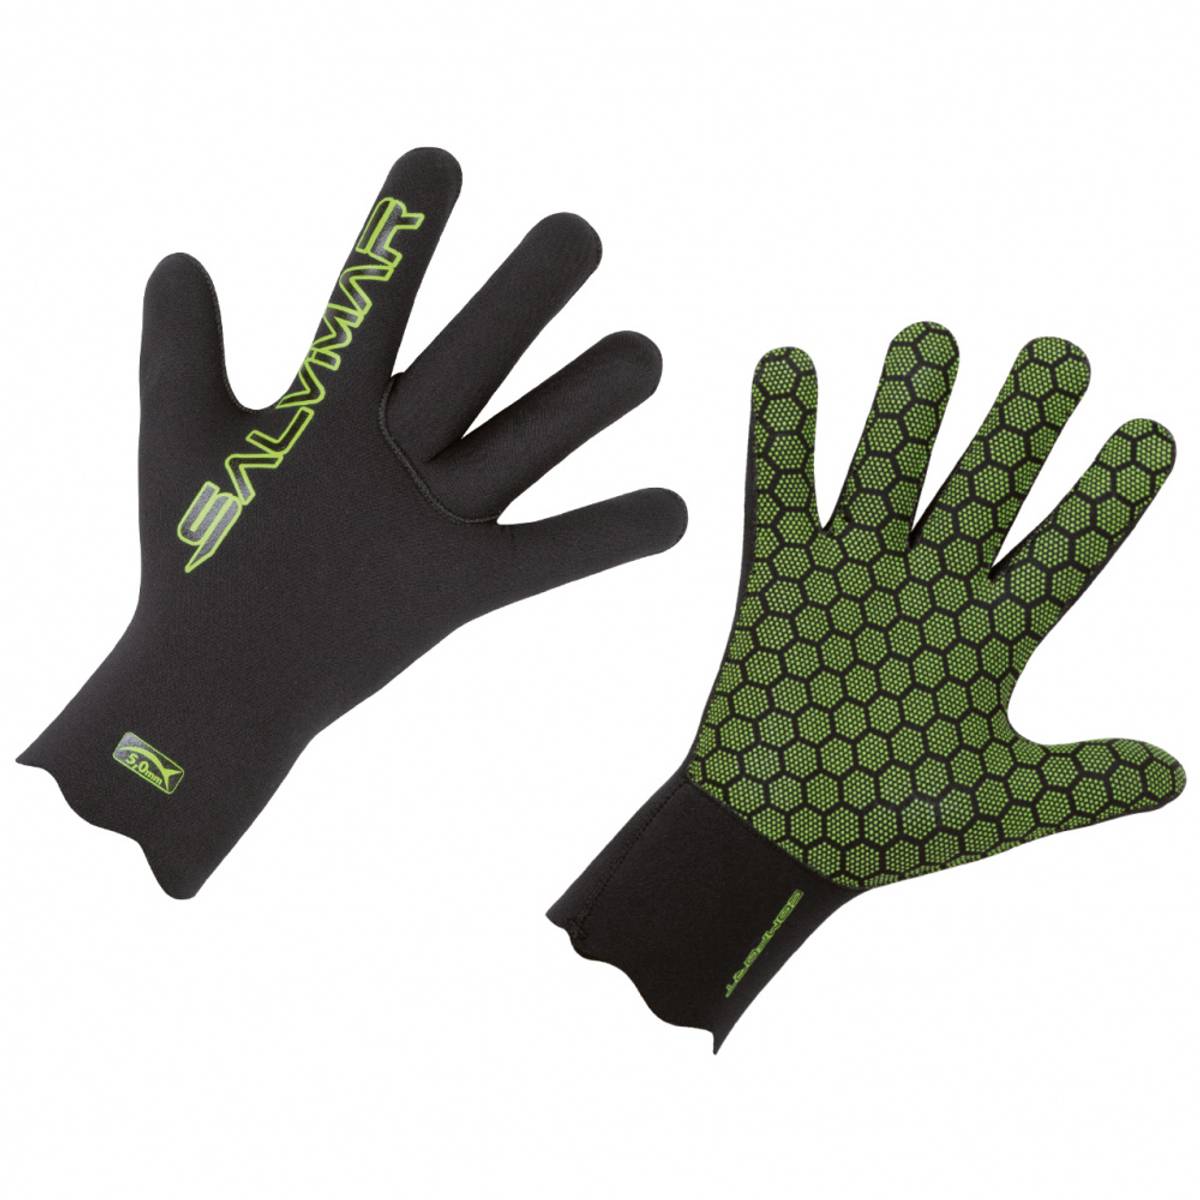 Salvimar Comfort 3mm neoprene gloves